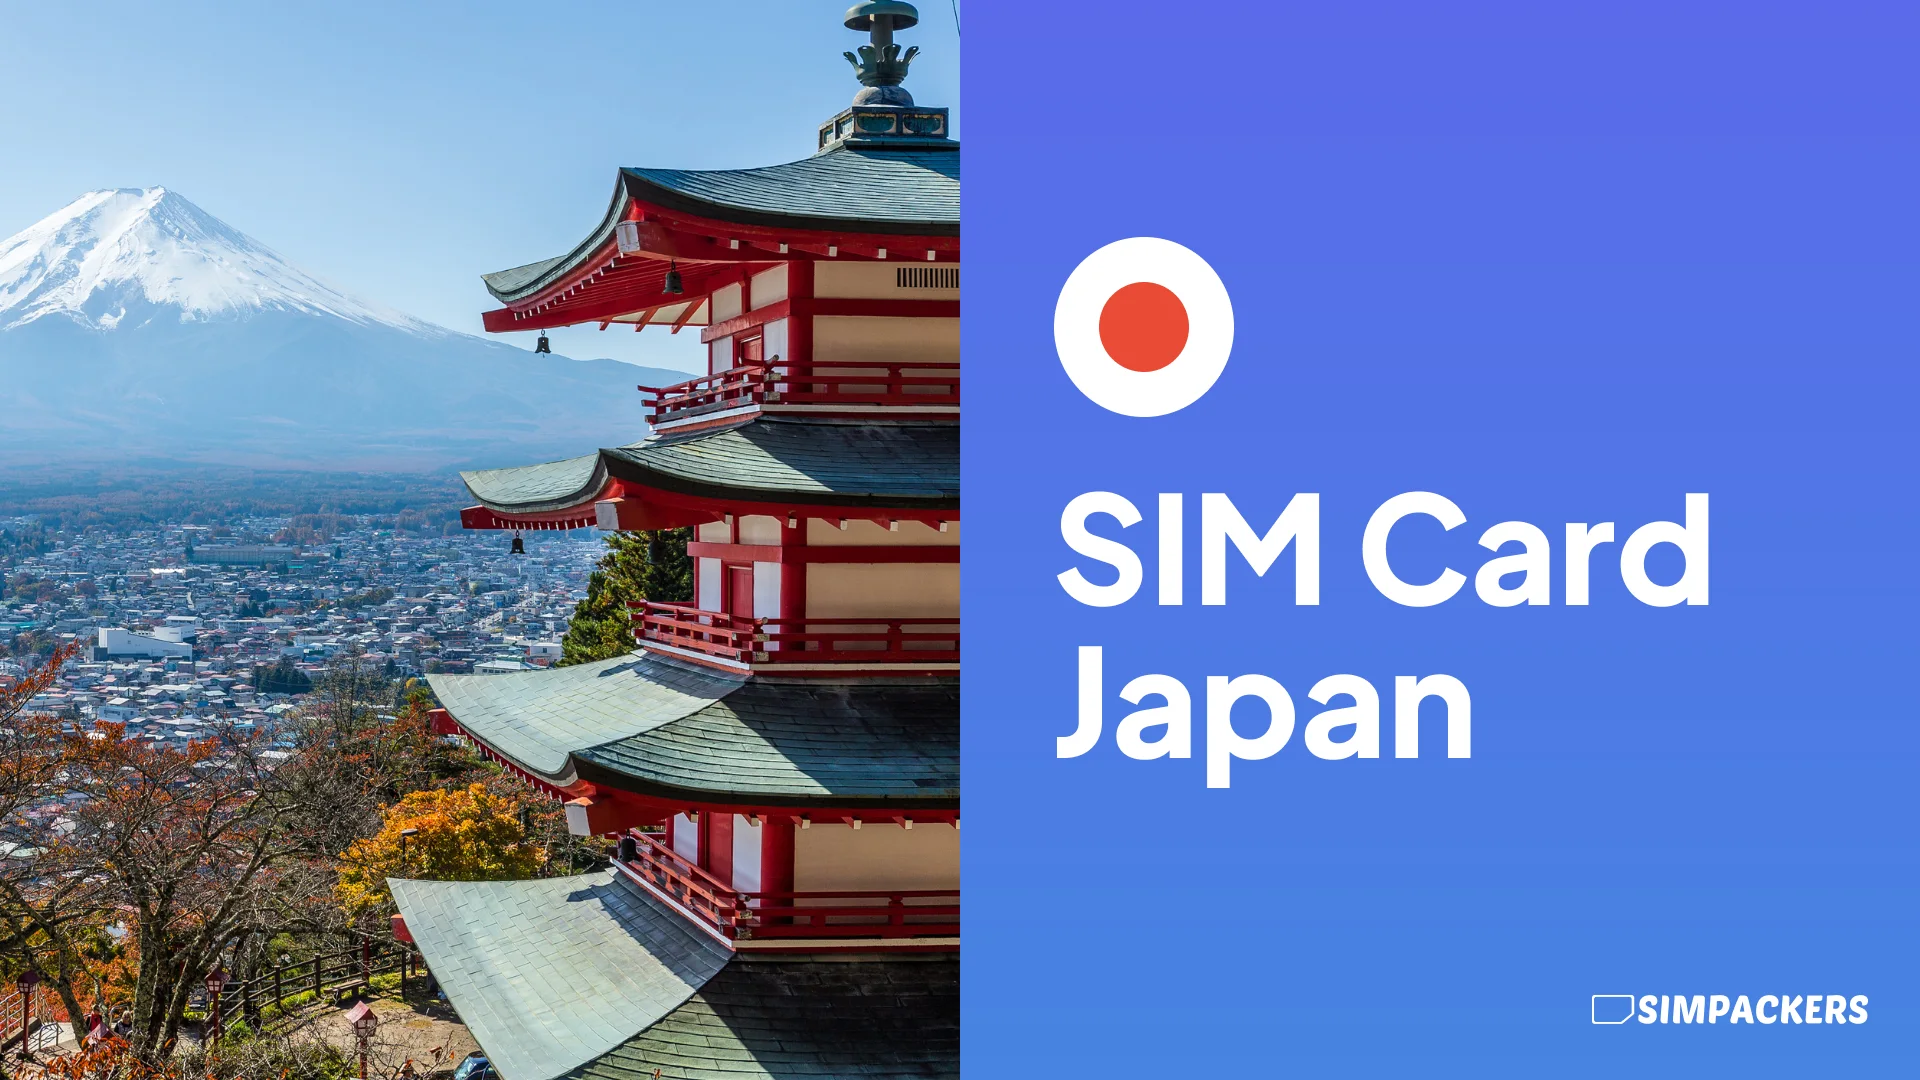 EN/FEATURED_IMAGES/sim-card-japan.webp